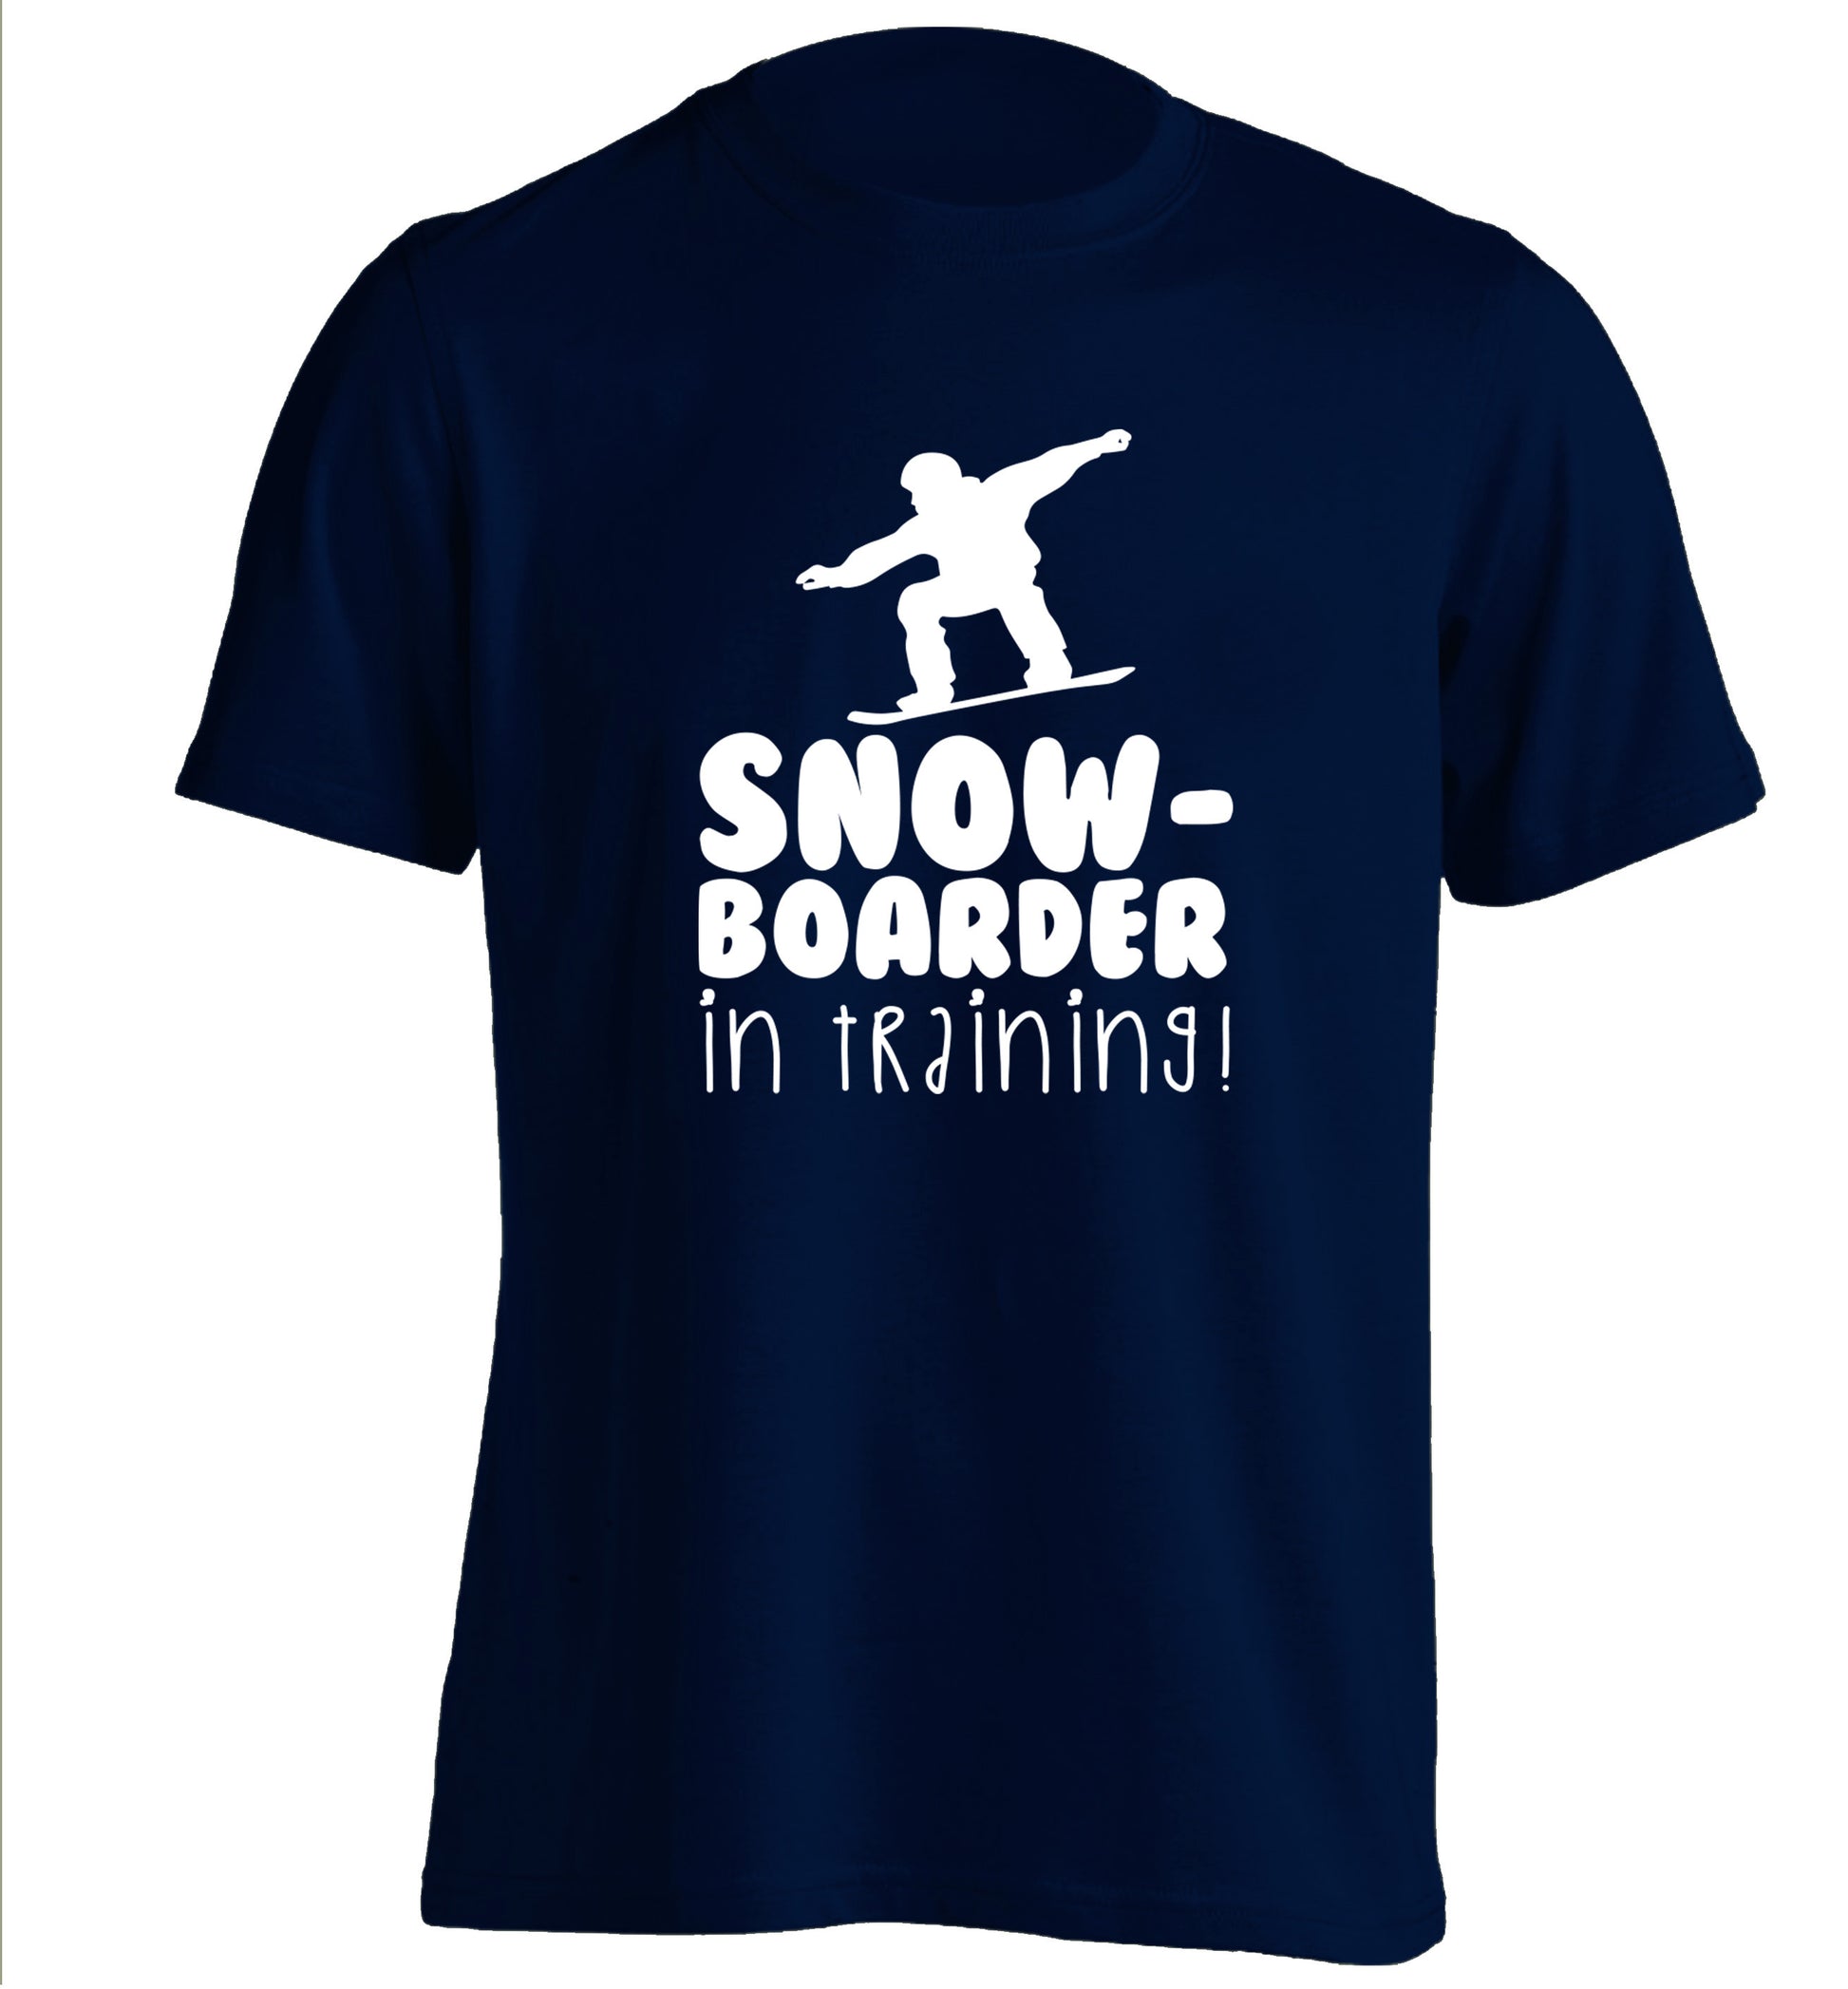 Snowboarder in training adults unisex navy Tshirt 2XL